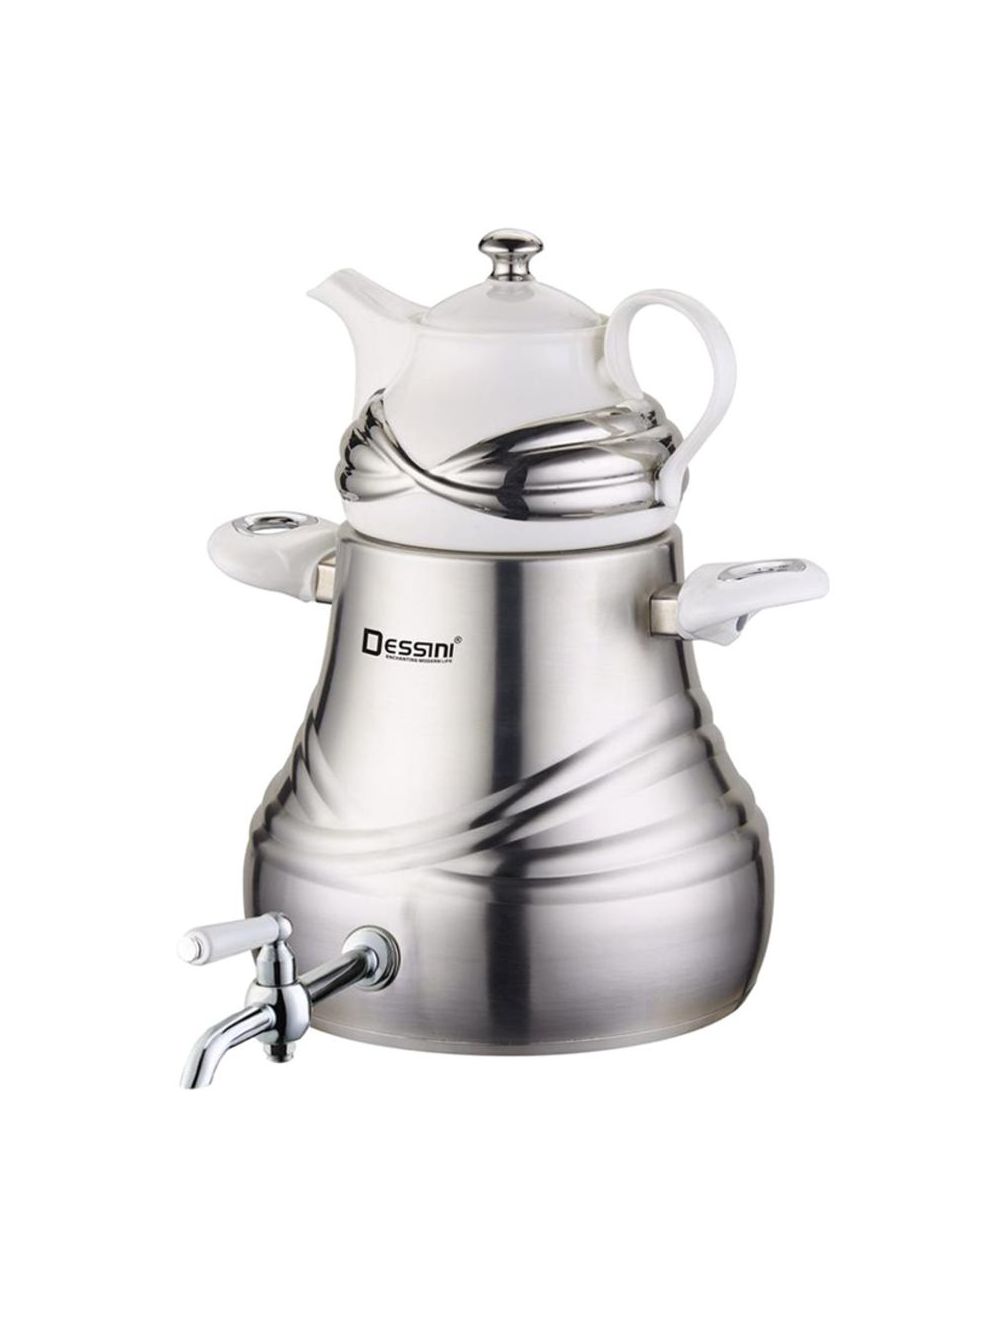 Dessini Steel Tea Pot 6 Ltr with Porcelain Pot-AKAT67